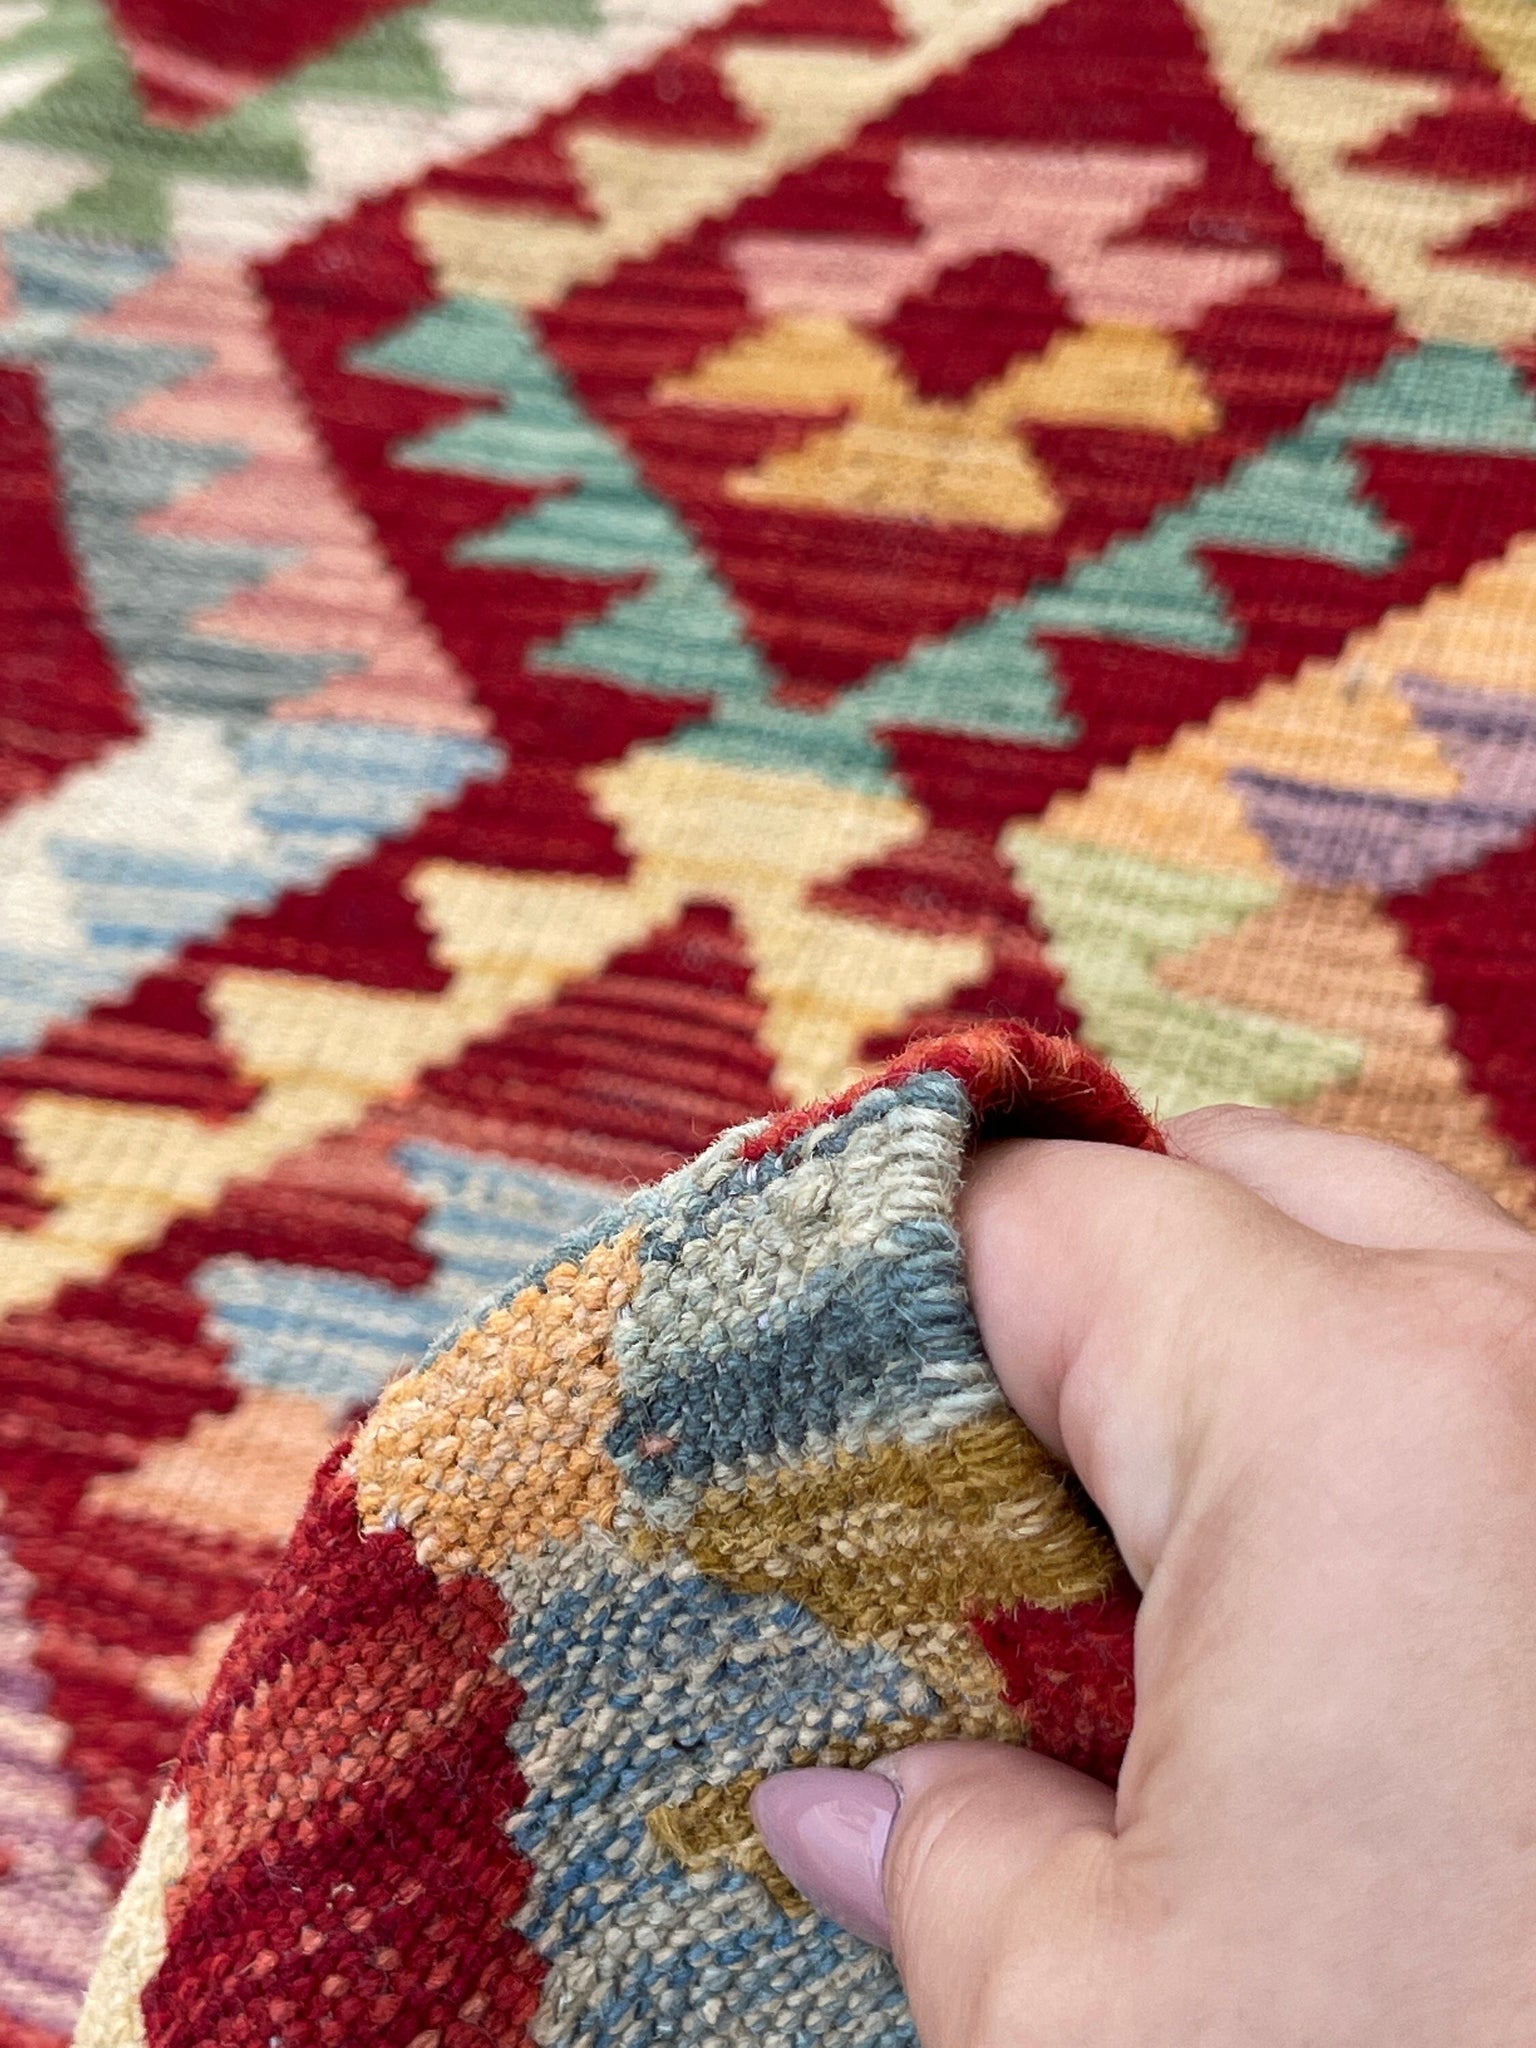 7x10 (215x305) Handmade Afghan Kilim Flatweave Rug | Red Pink Purple Turquoise Orange Green| Boho Tribal Moroccan Outdoor Wool Knotted Woven